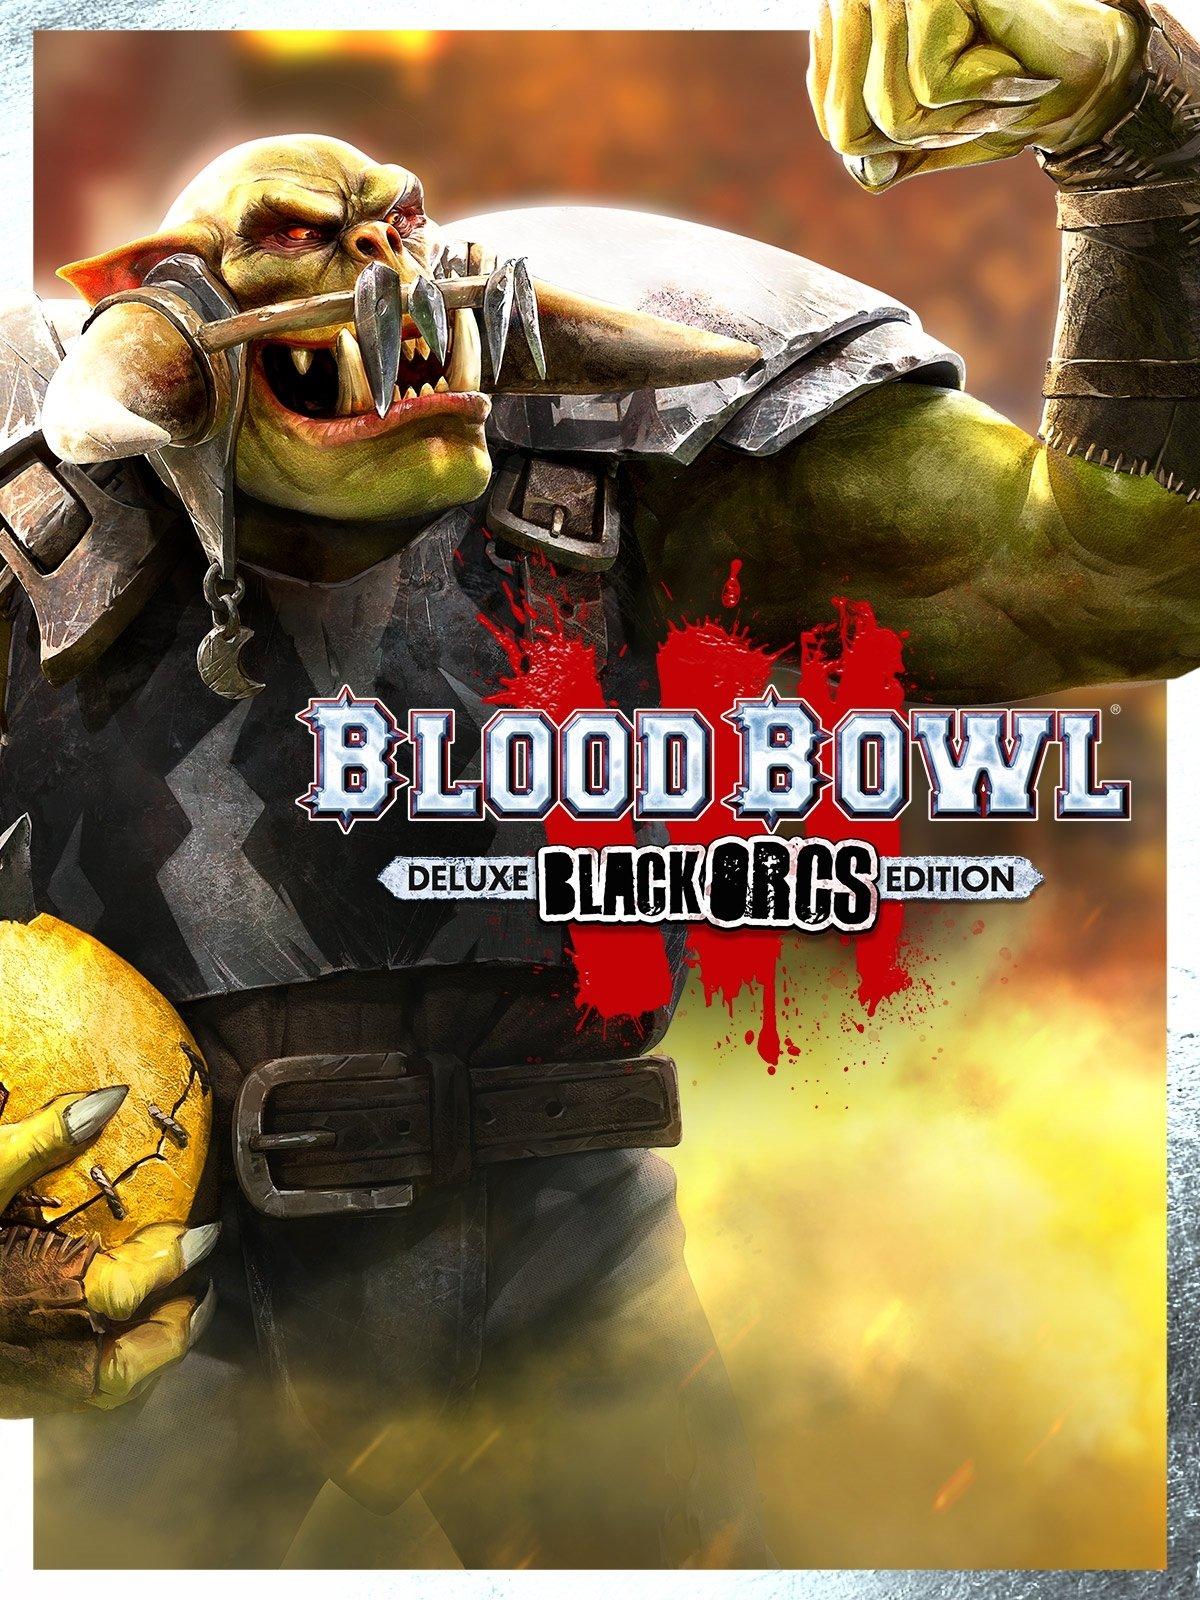 Blood Bowl 3 - Black Orcs Edition | ROW 1 (ac9efd6c-8800-4a9f-a369-953356d23856)